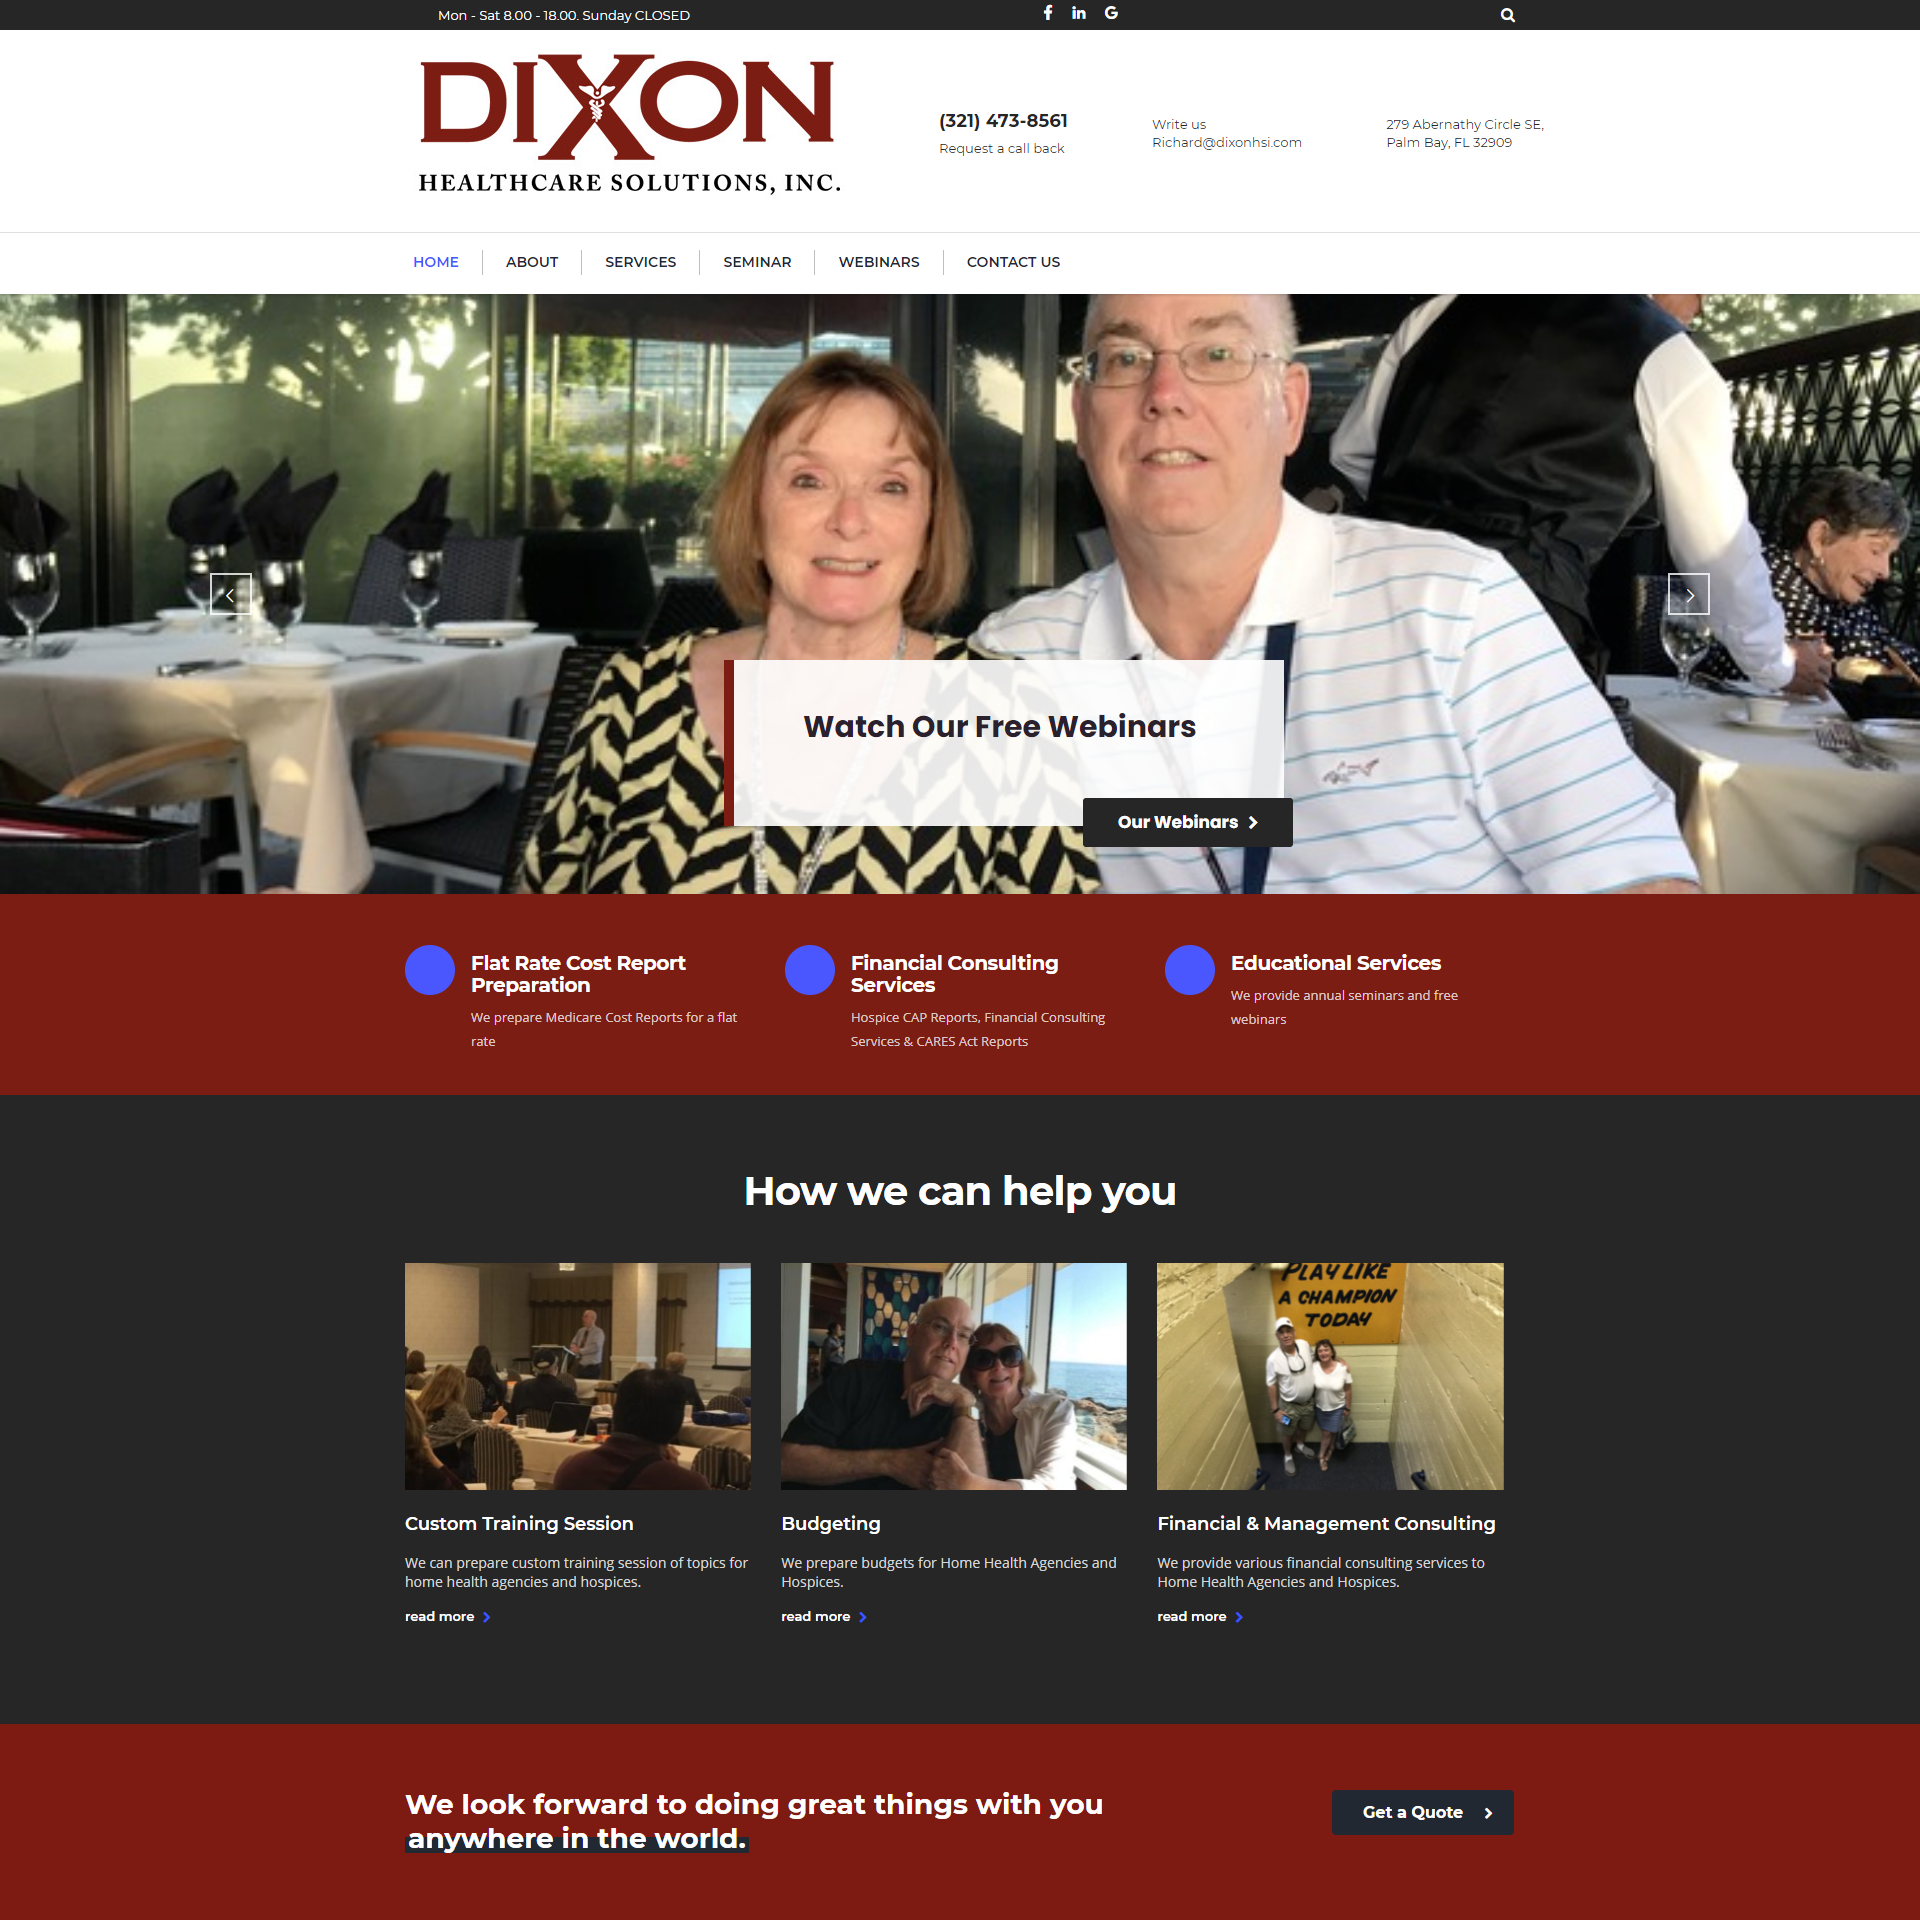 Dixon Healthcare Solutions